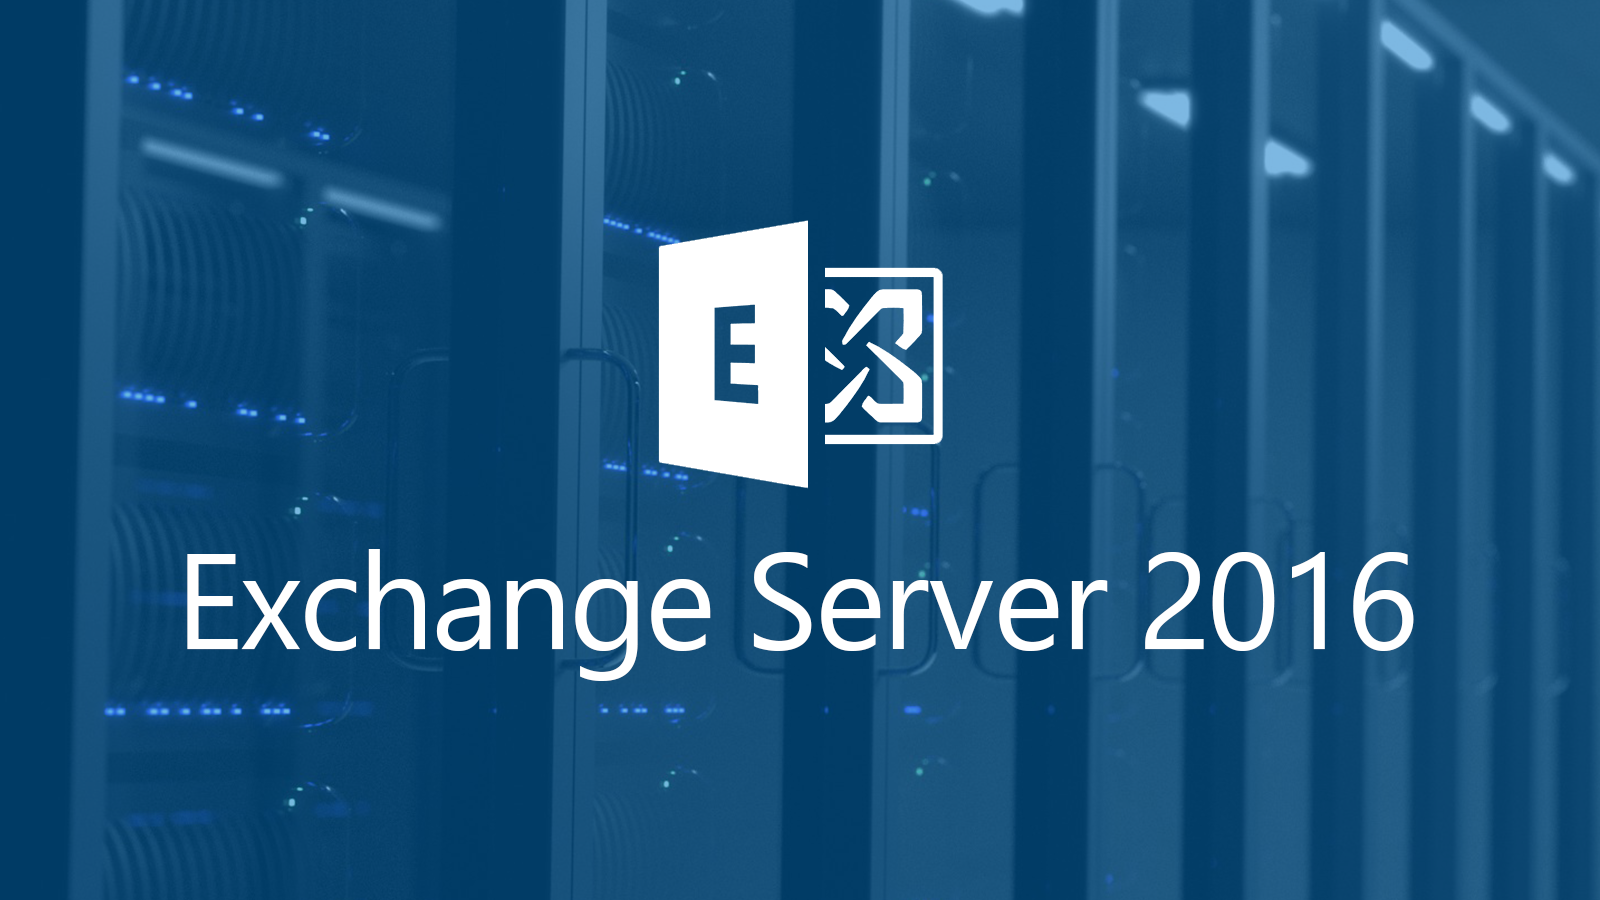 Microsoft Exchange Server Broad Works